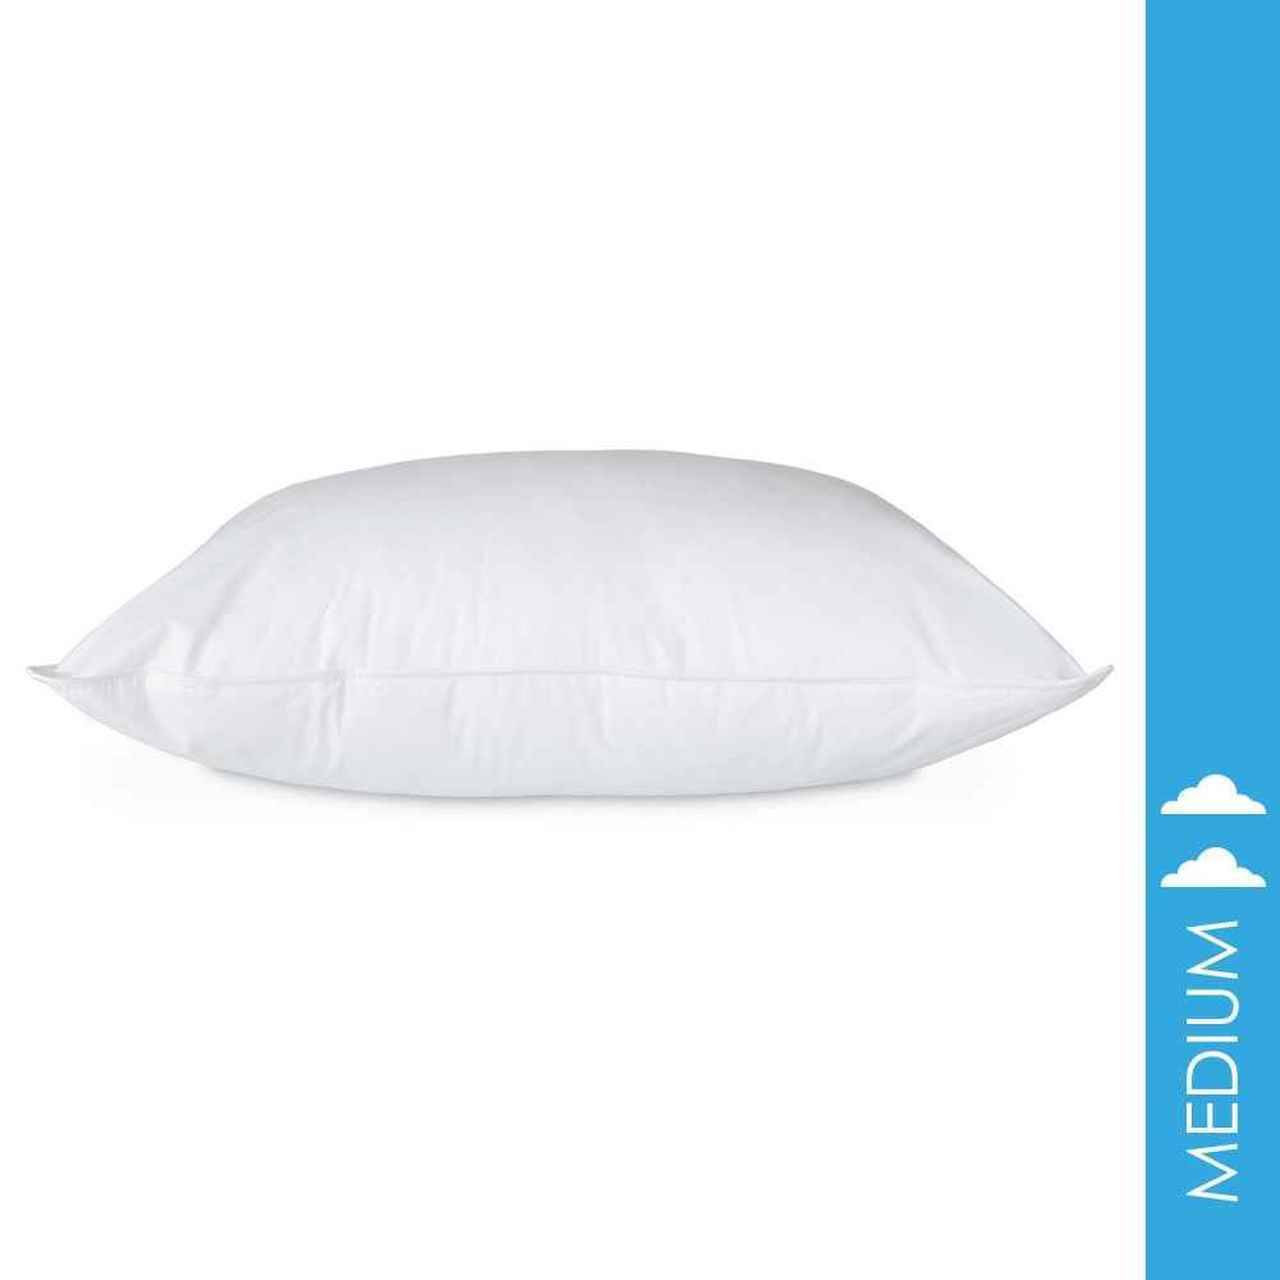 DownLite Bedding Downlite Pillows or EnviroLoft Blown Polyester Fiber